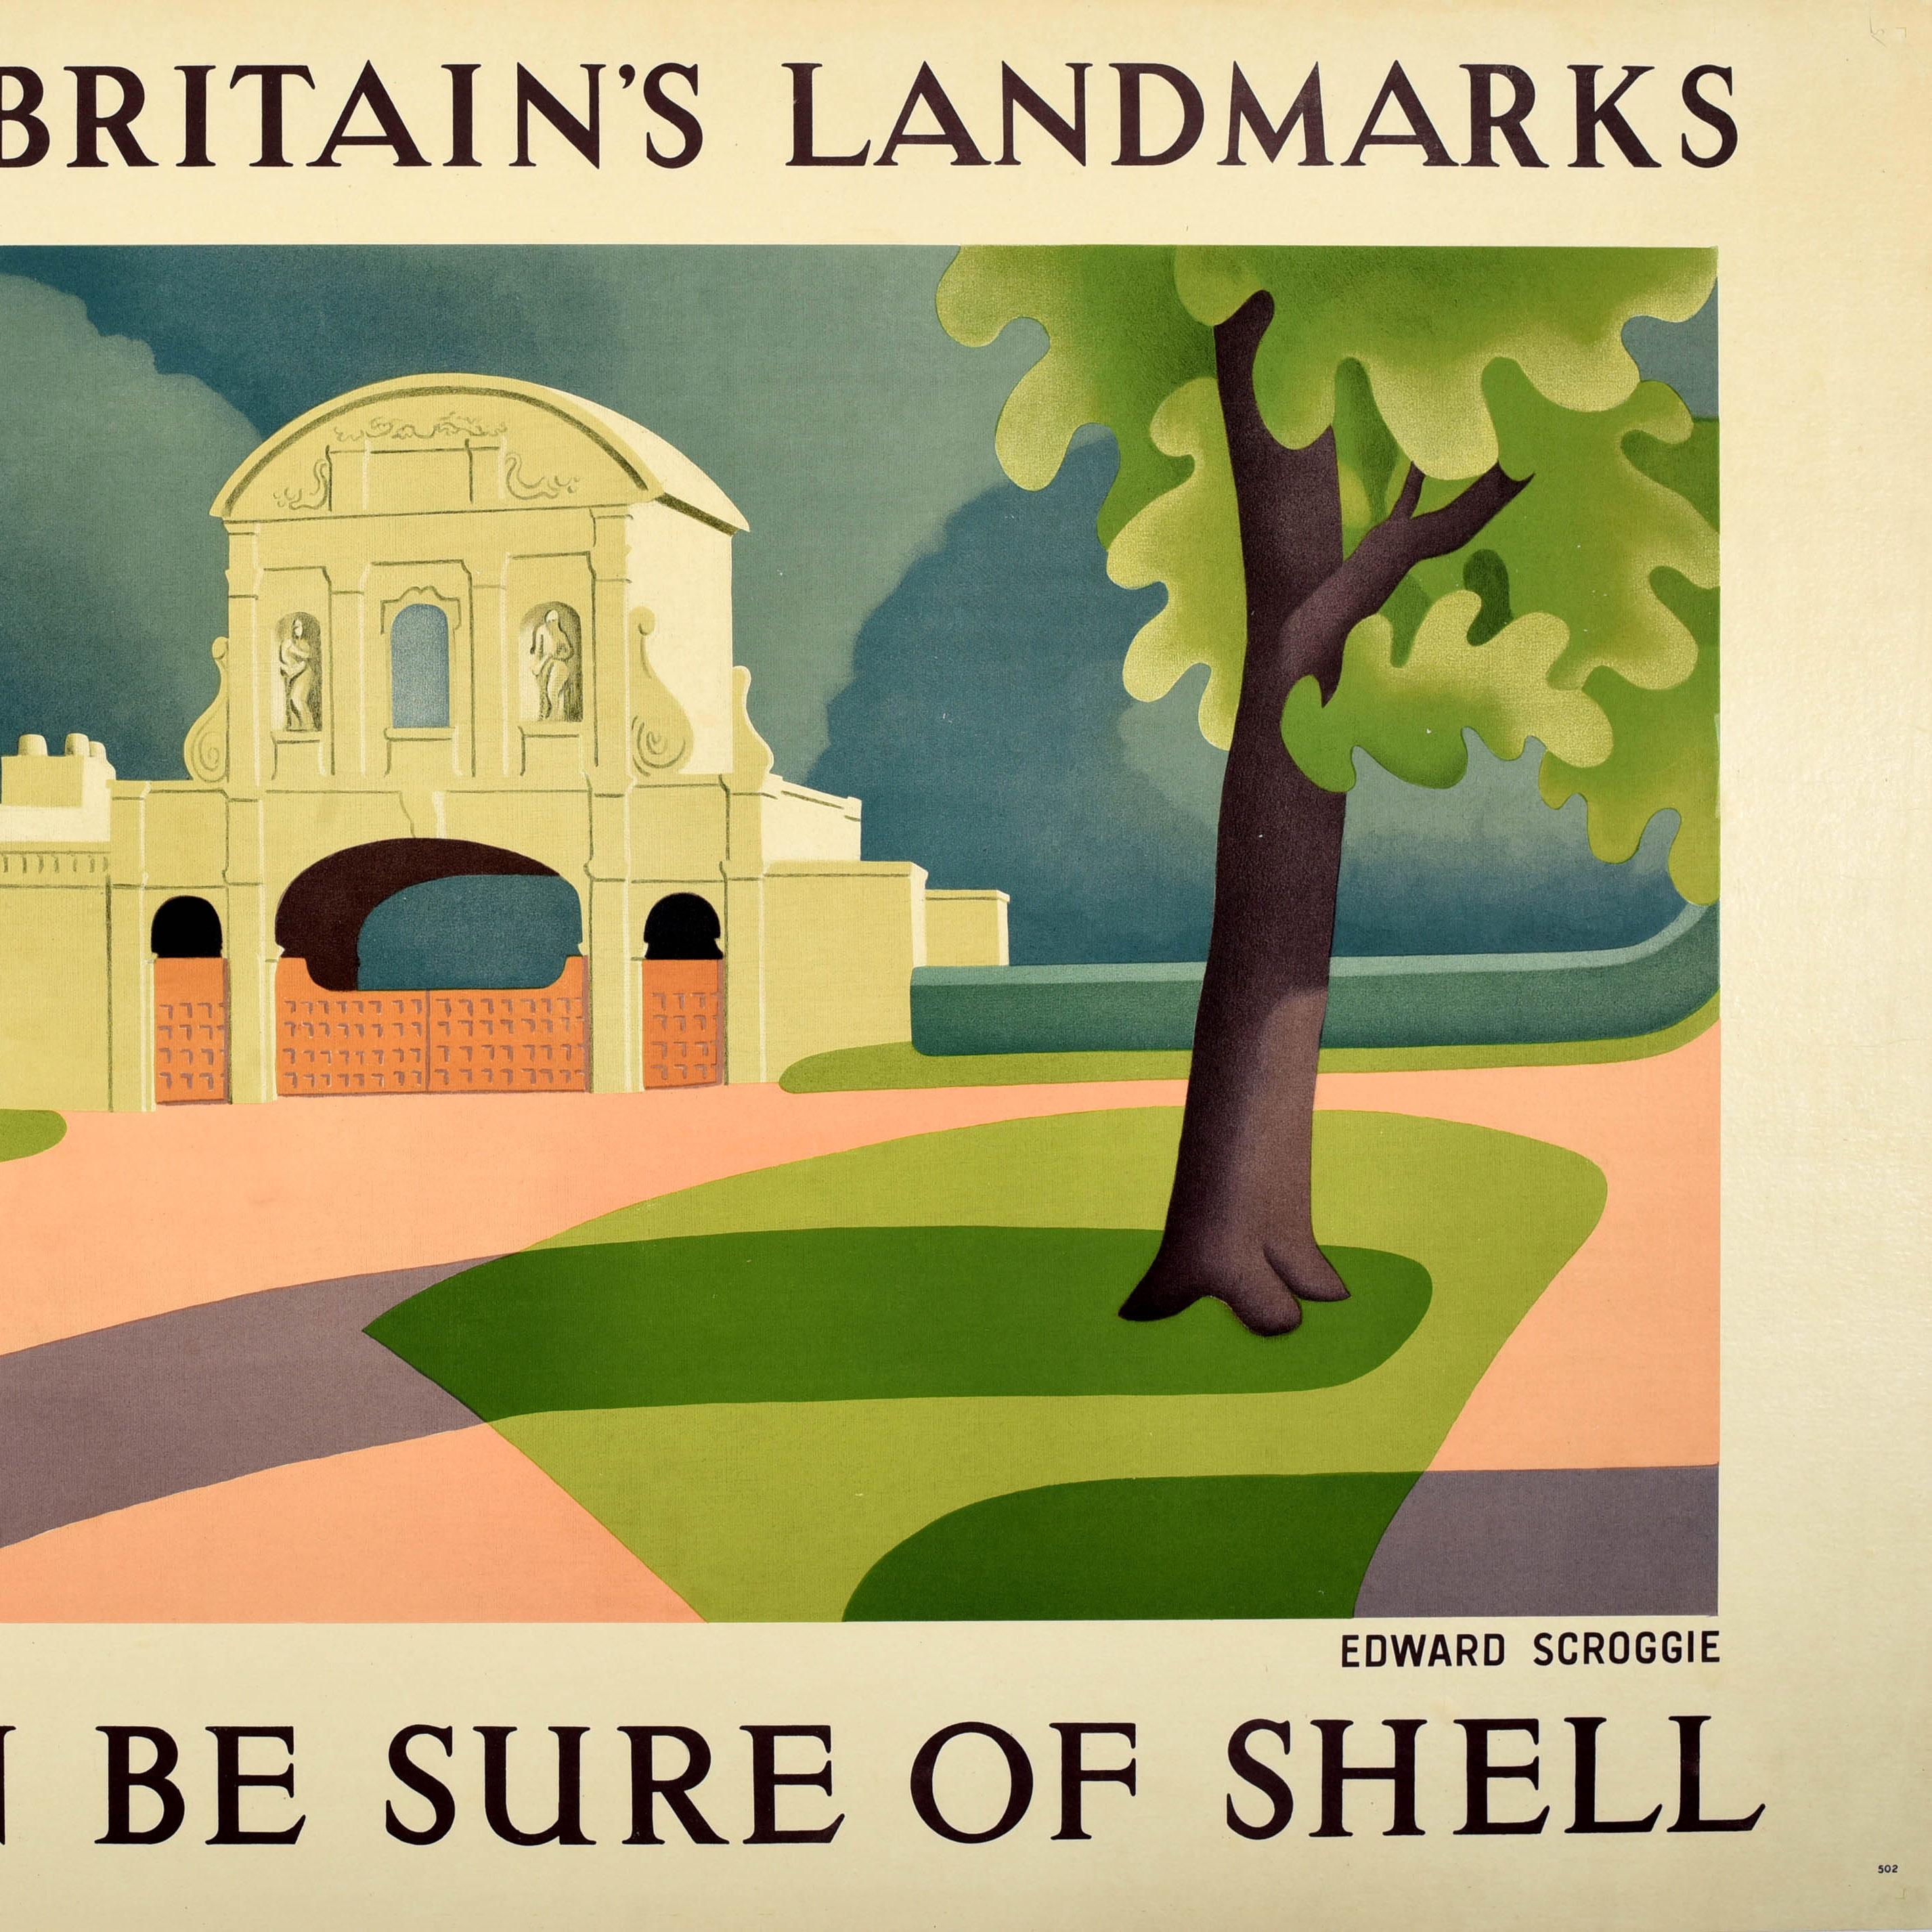 Paper Original Vintage Travel Advertising Poster Shell British Landmarks London Temple For Sale